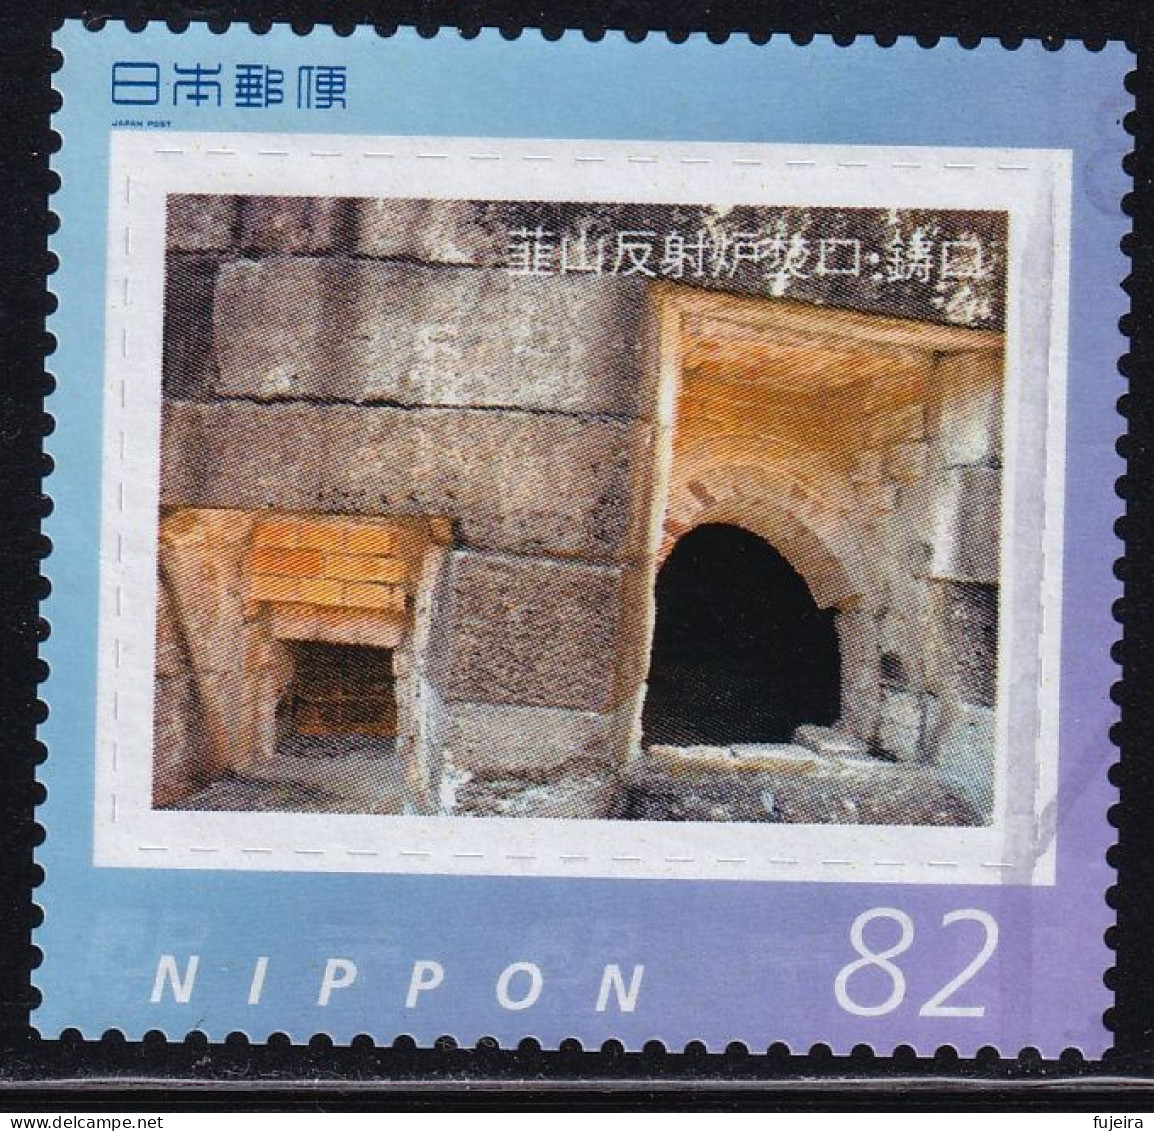 Japan Personalized Stamp, Nirayama Reverberatory Furnace Firing Mouth/casting Mouth (jpv9516) Used - Gebruikt